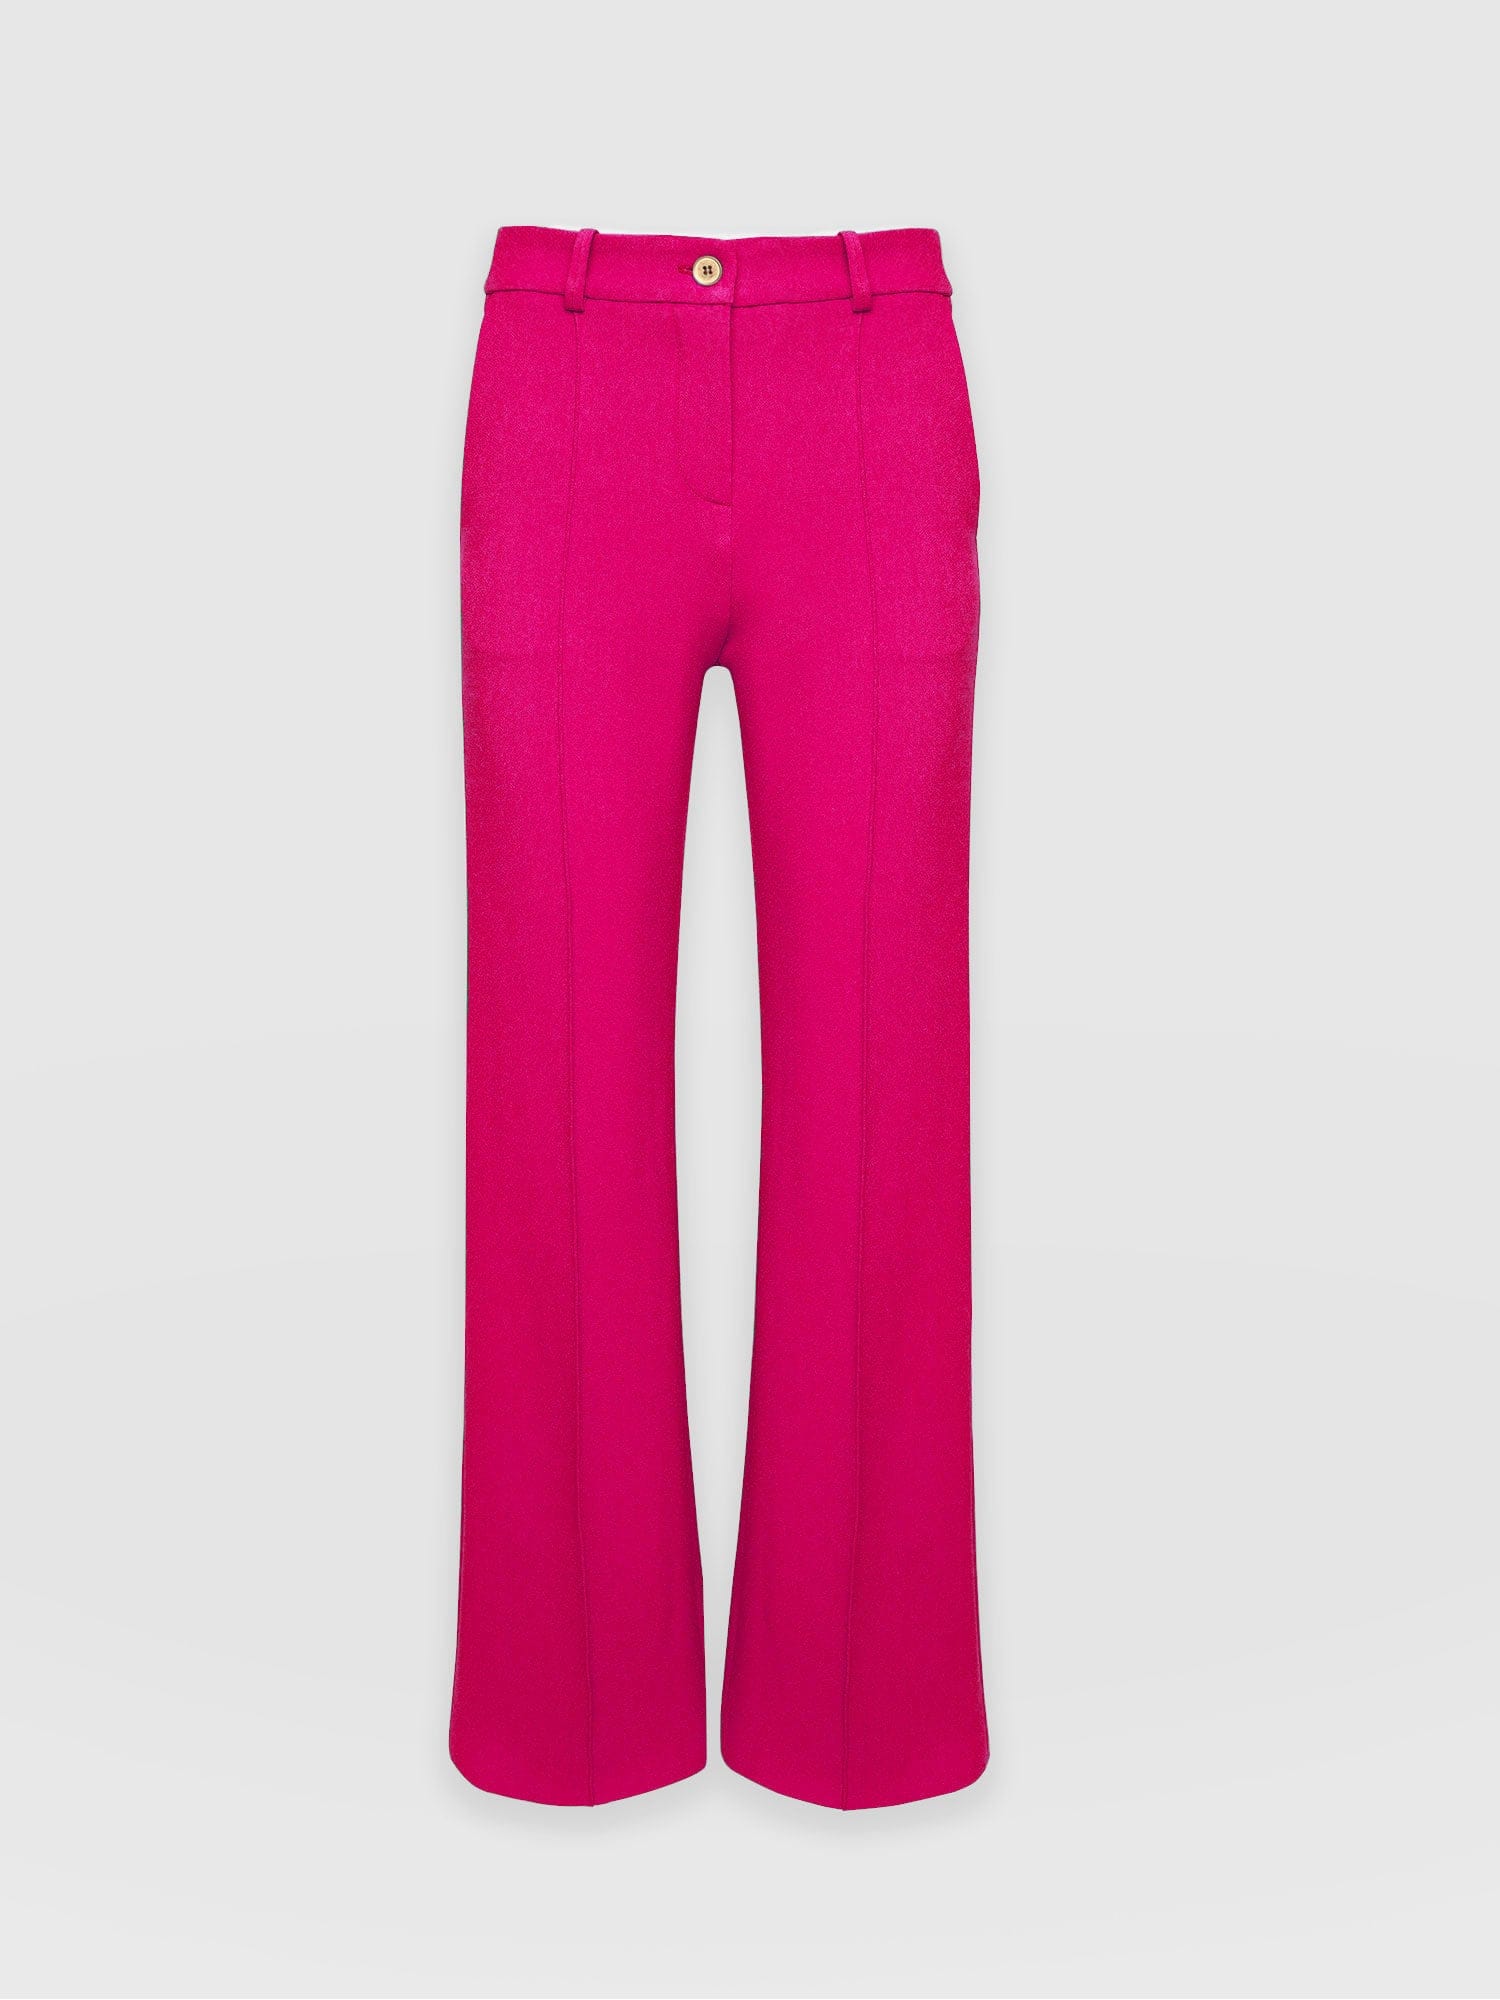 pink pants for women | Nordstrom